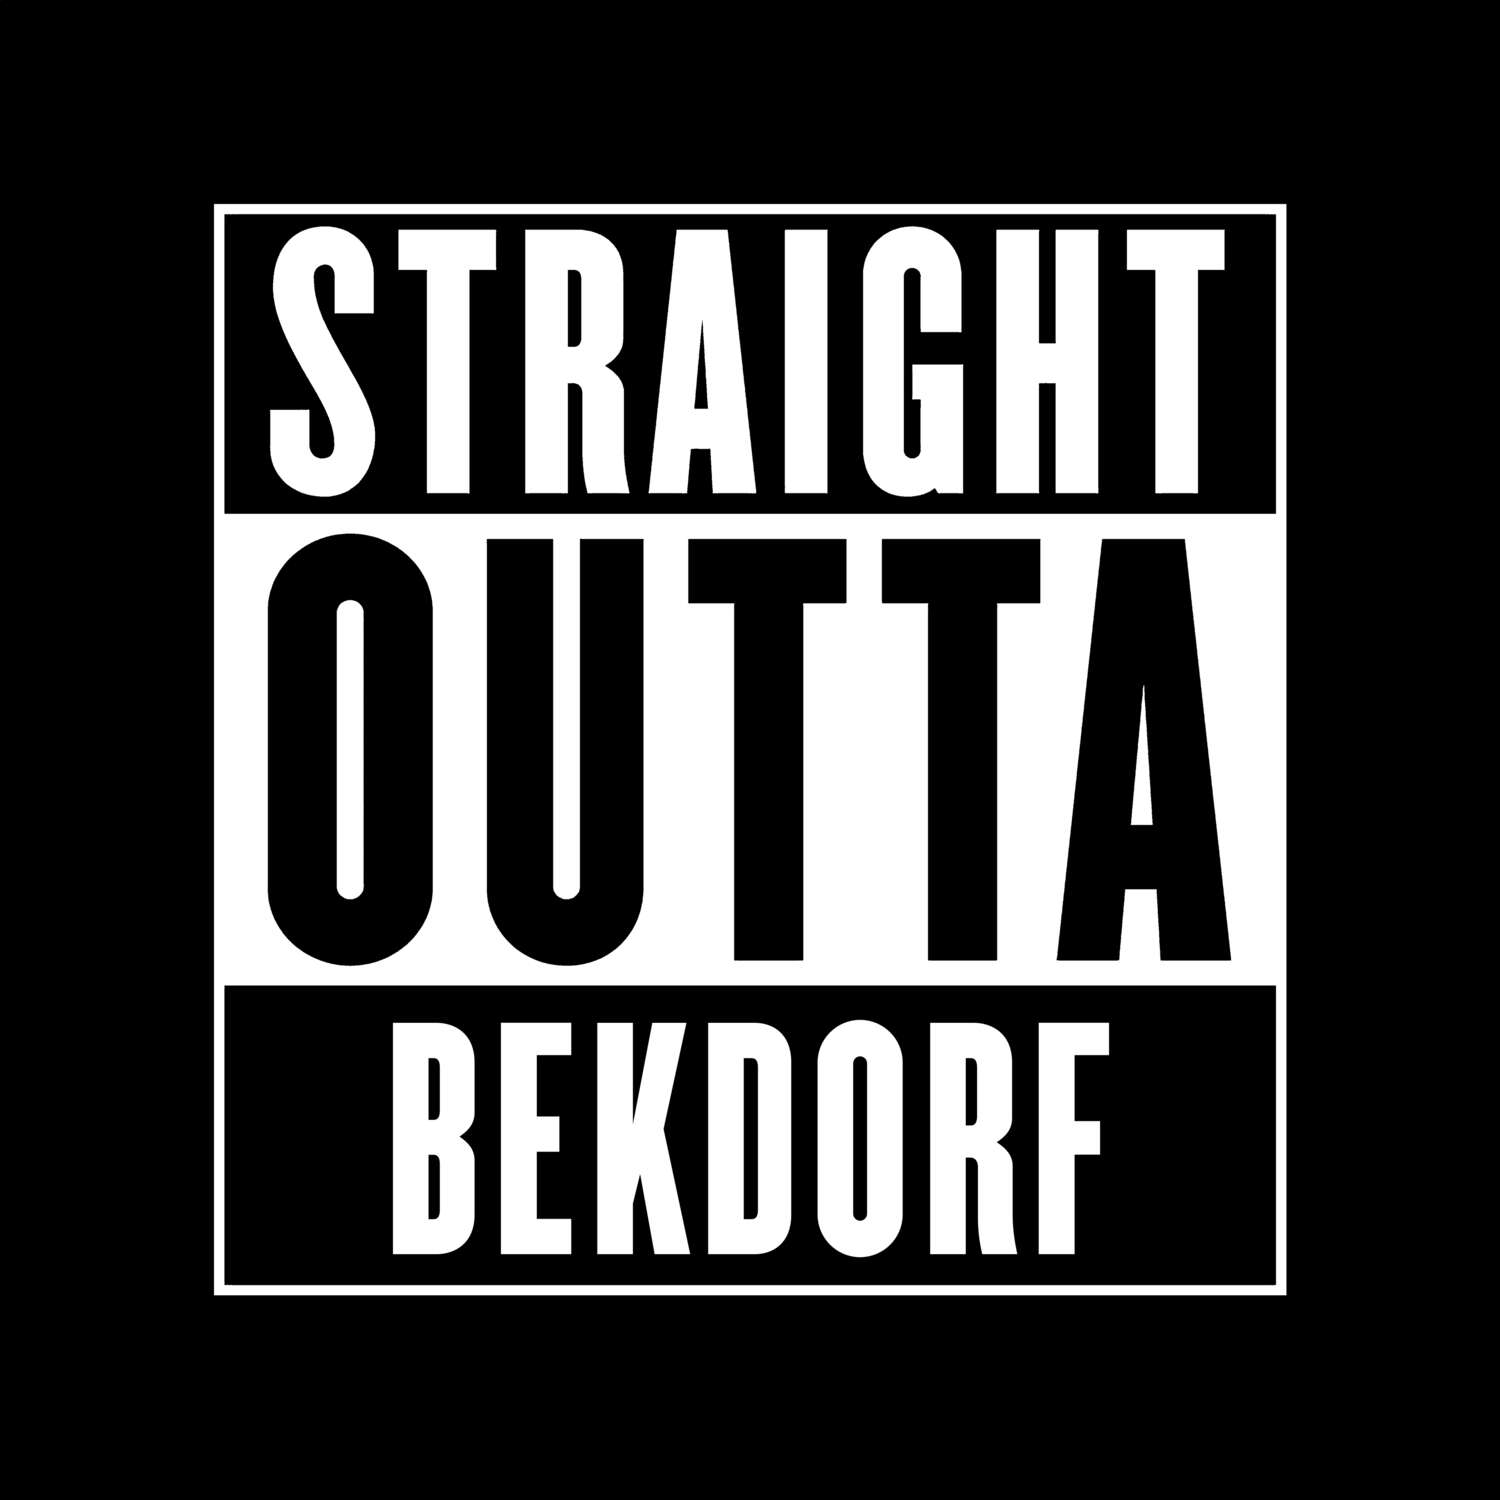 Bekdorf T-Shirt »Straight Outta«